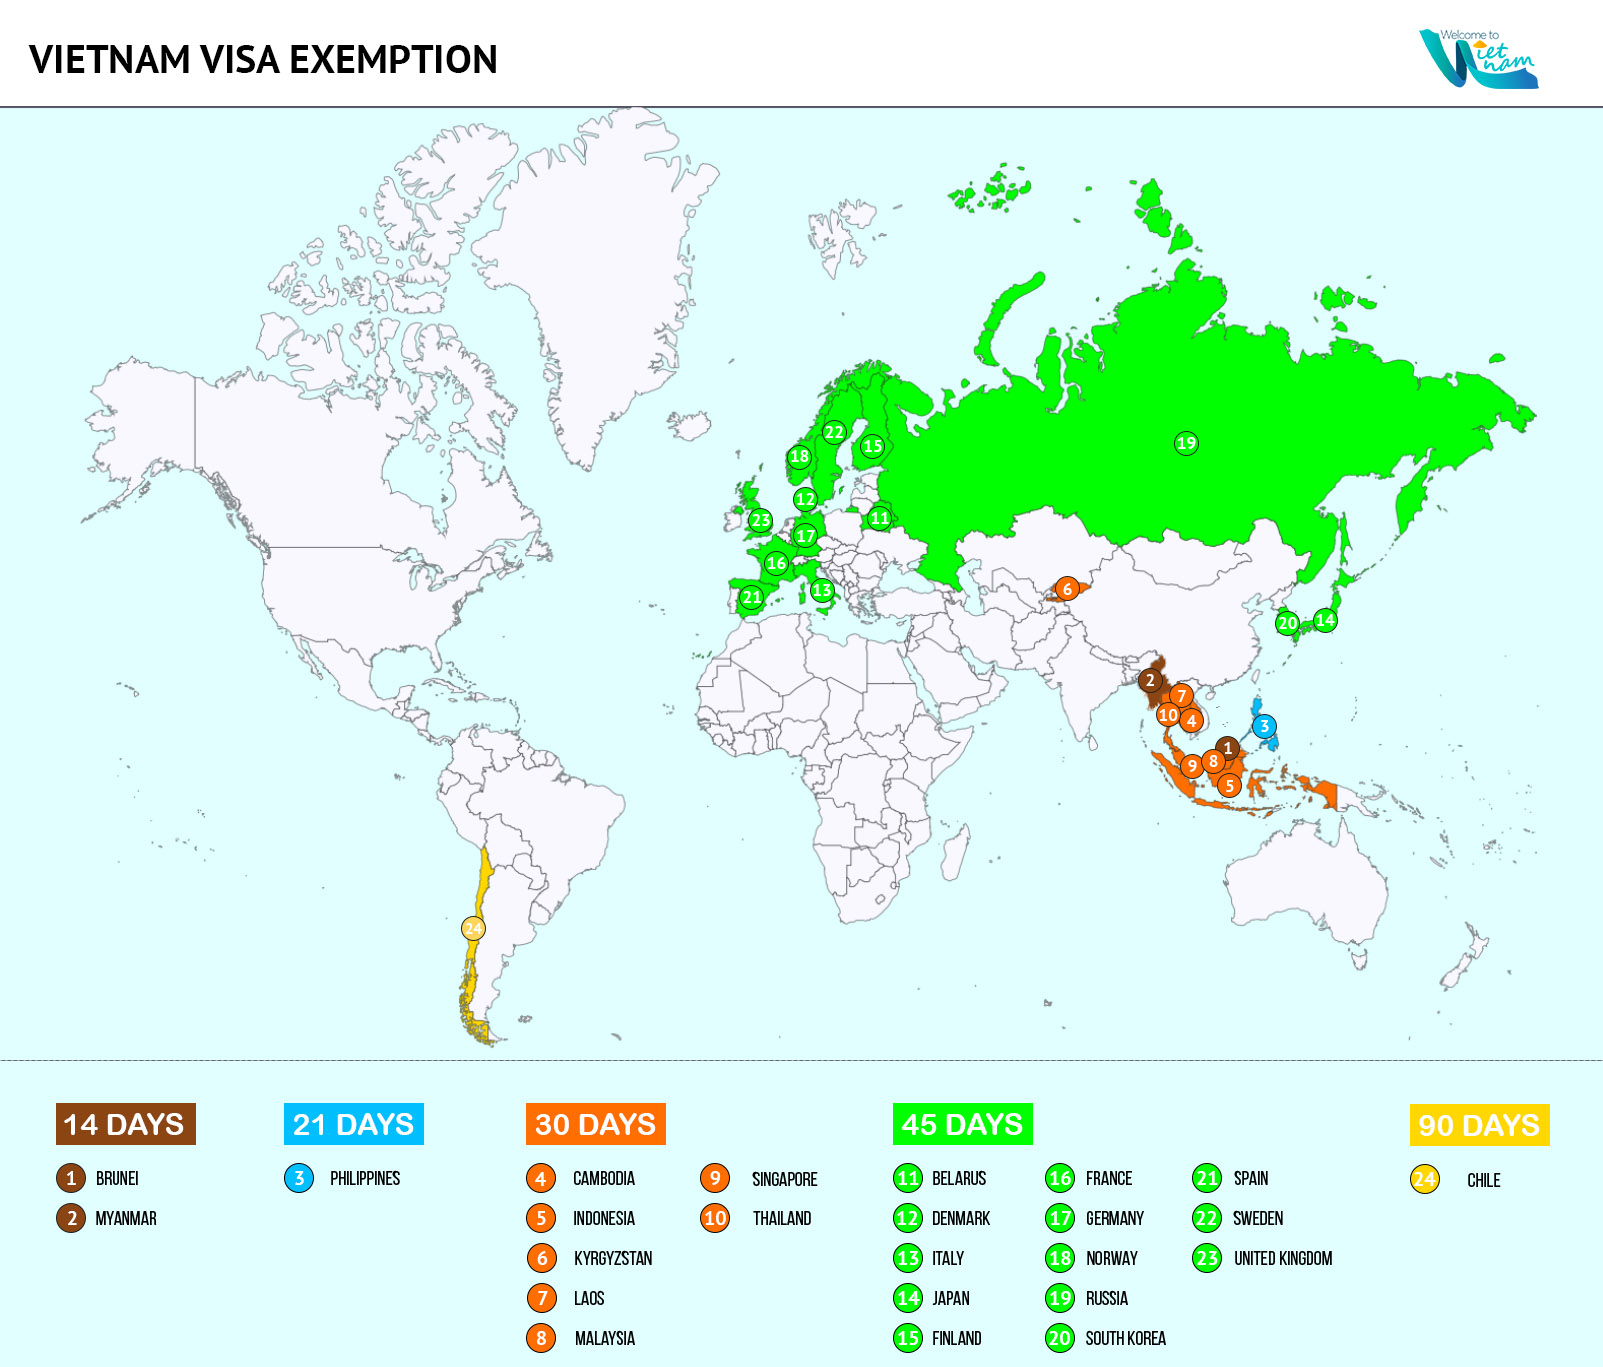 List of countries that enjoy Vietnam’s visa exemption